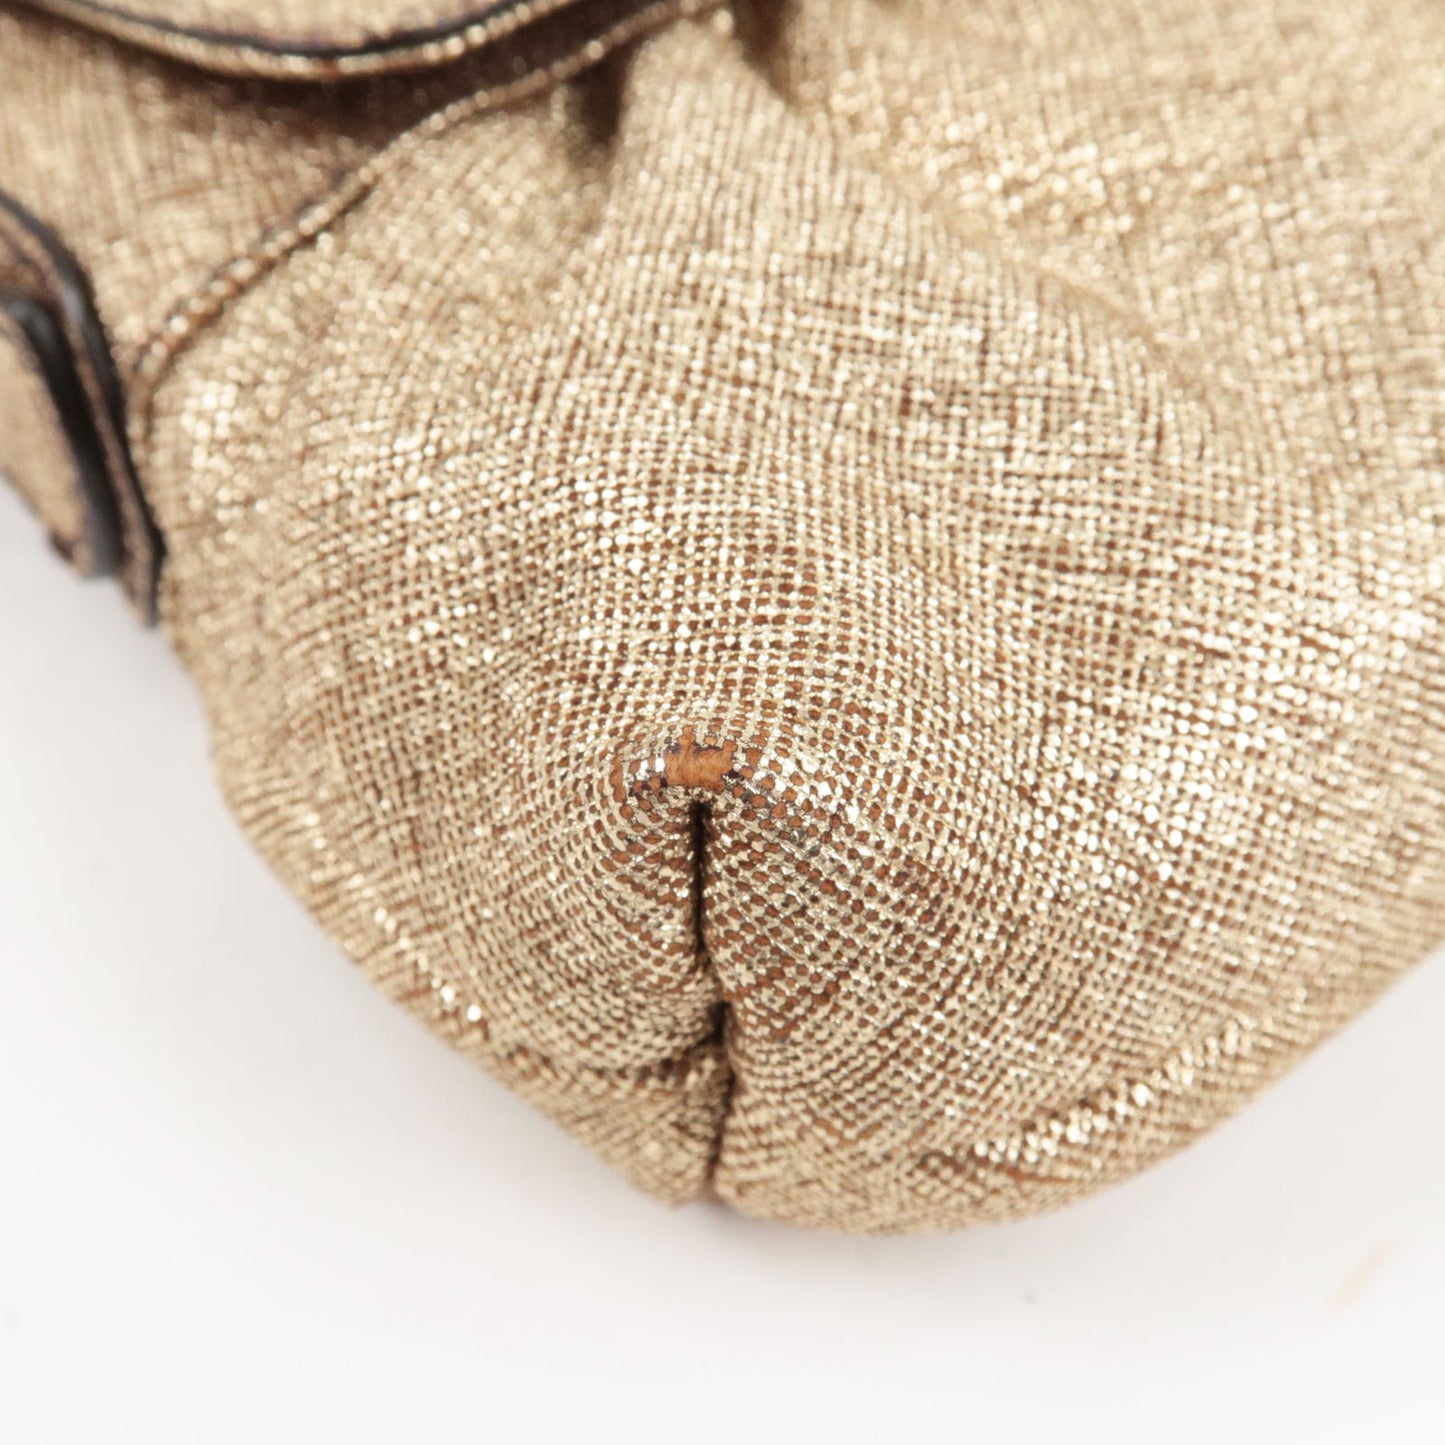 FENDI Canvas Leather Hand Bag Purse Metallic Gold 8BK042